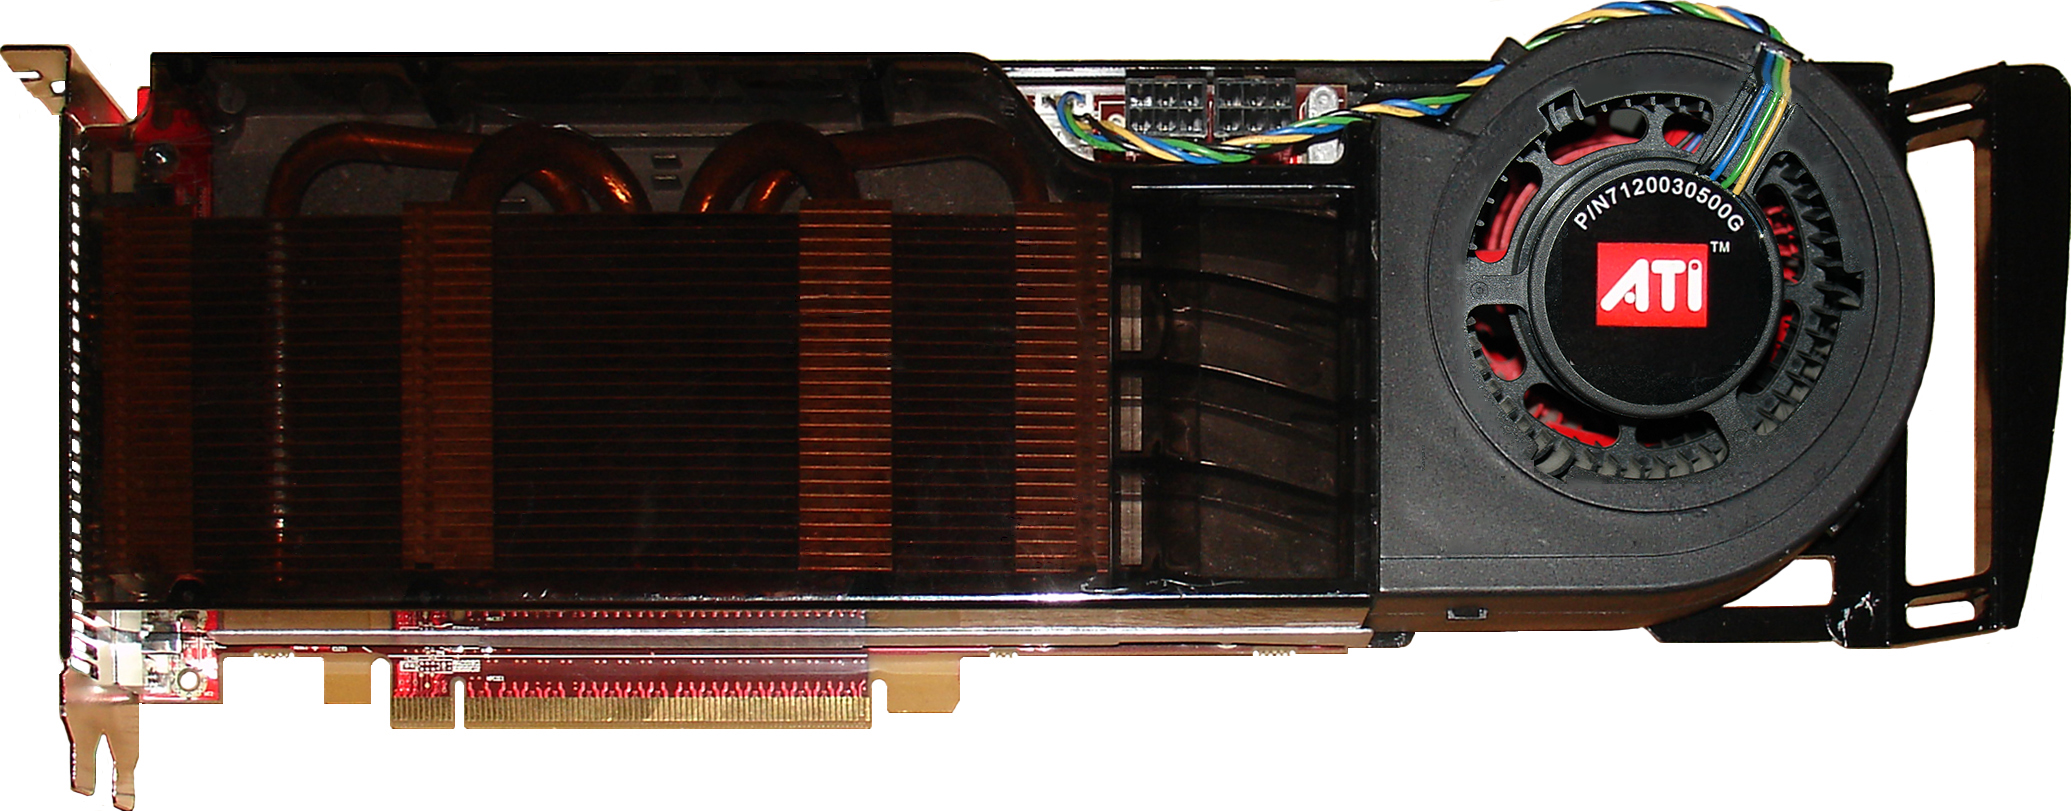 ATi Radeon HD 2900 XTX PCI-E 512MB 512Bit GDDR3 Rev_A0 0639 Engineering Sample top (1)1.jpg